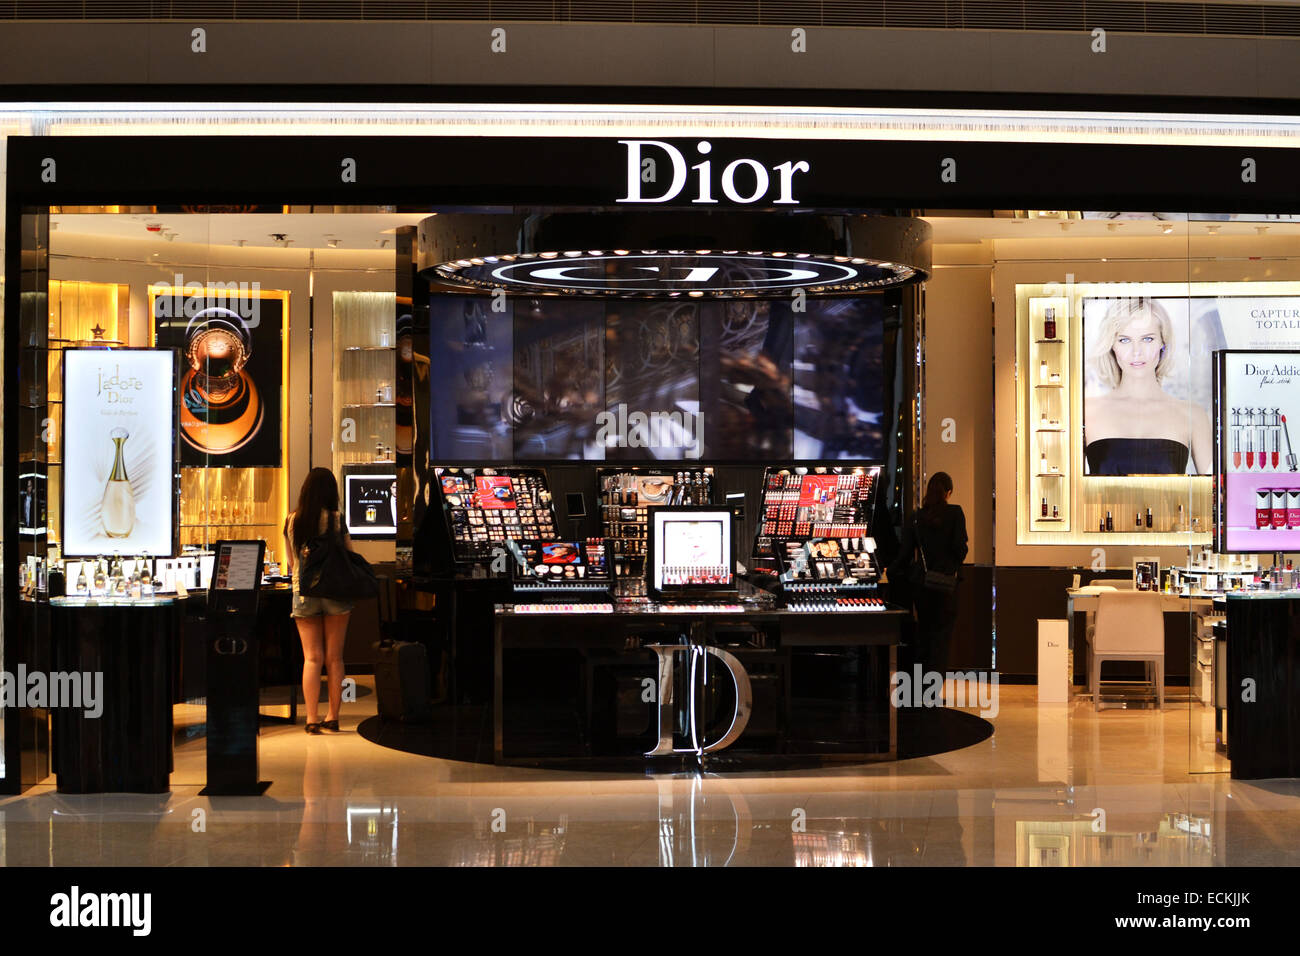 dior makeup store